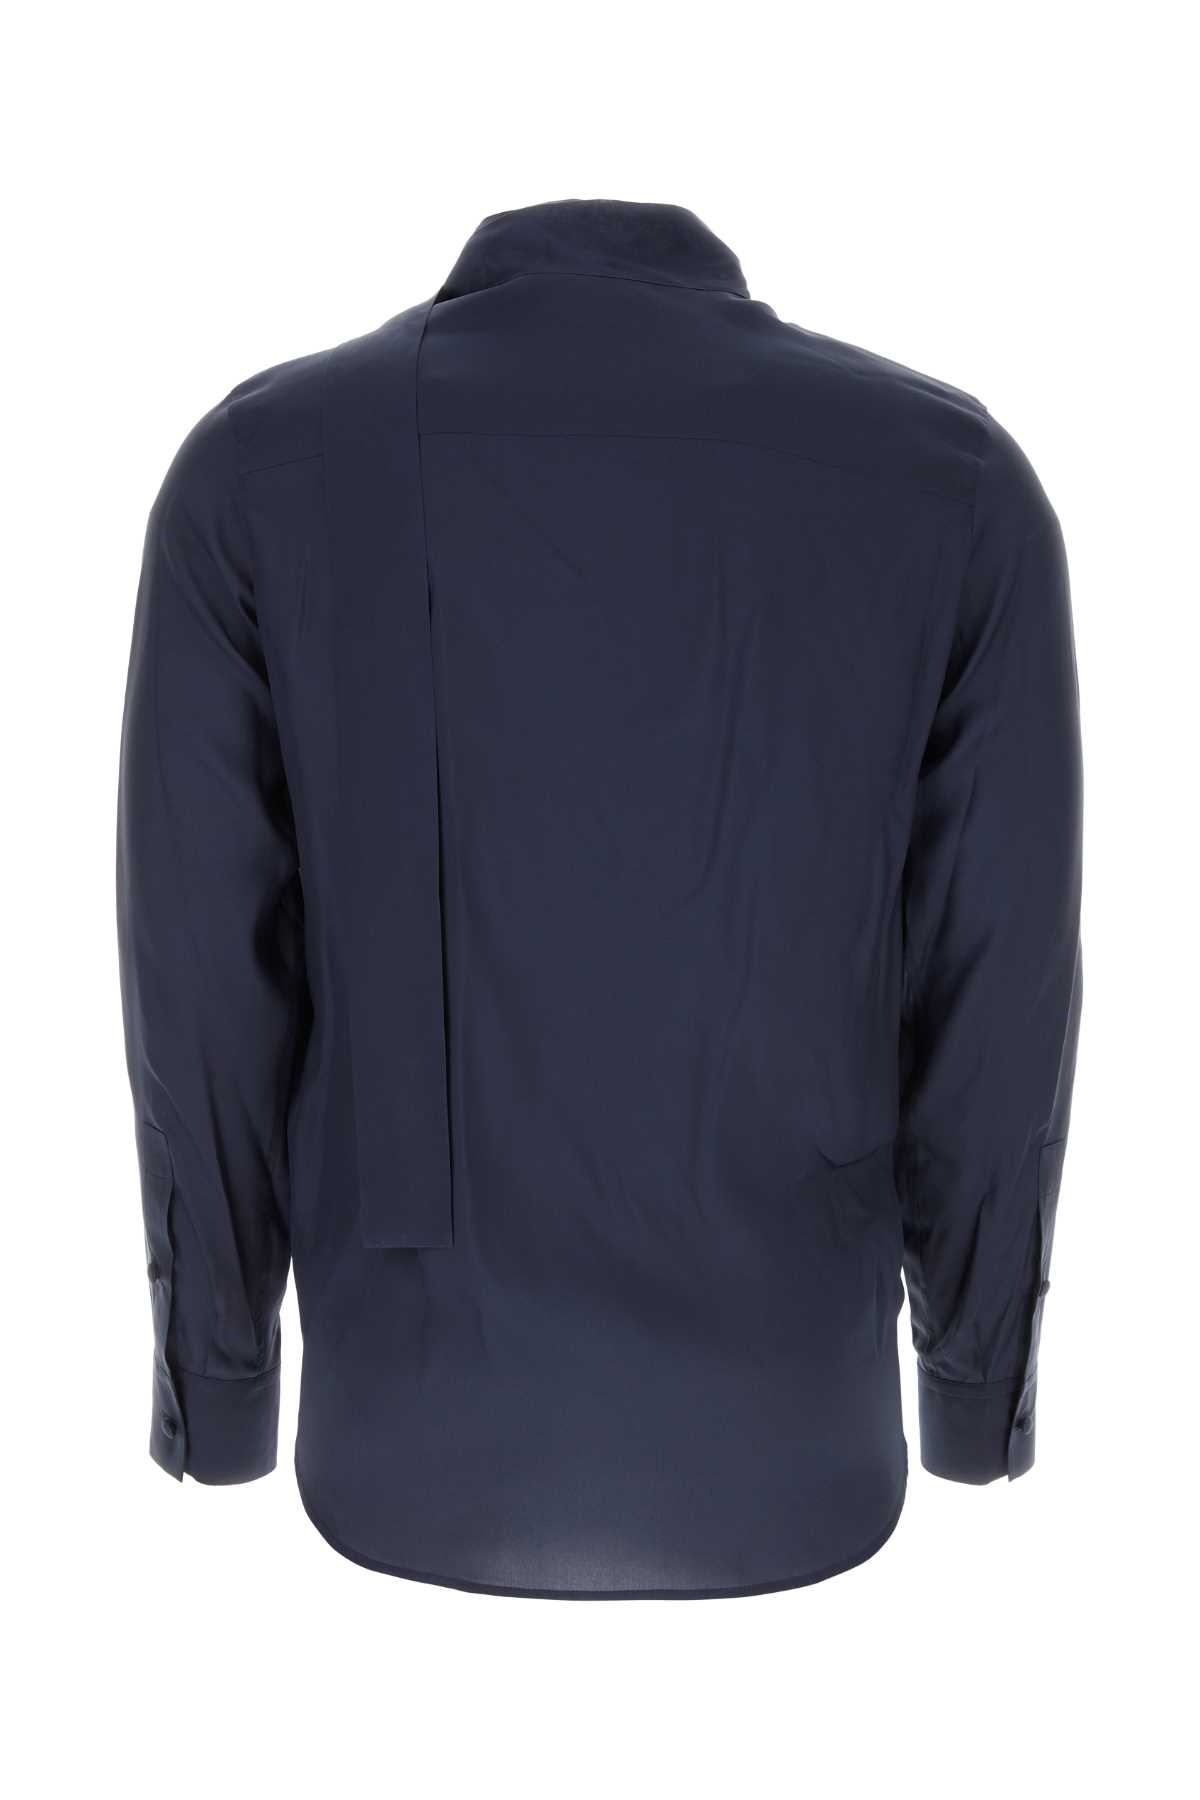 Valentino Navy Blue Silk Shirt